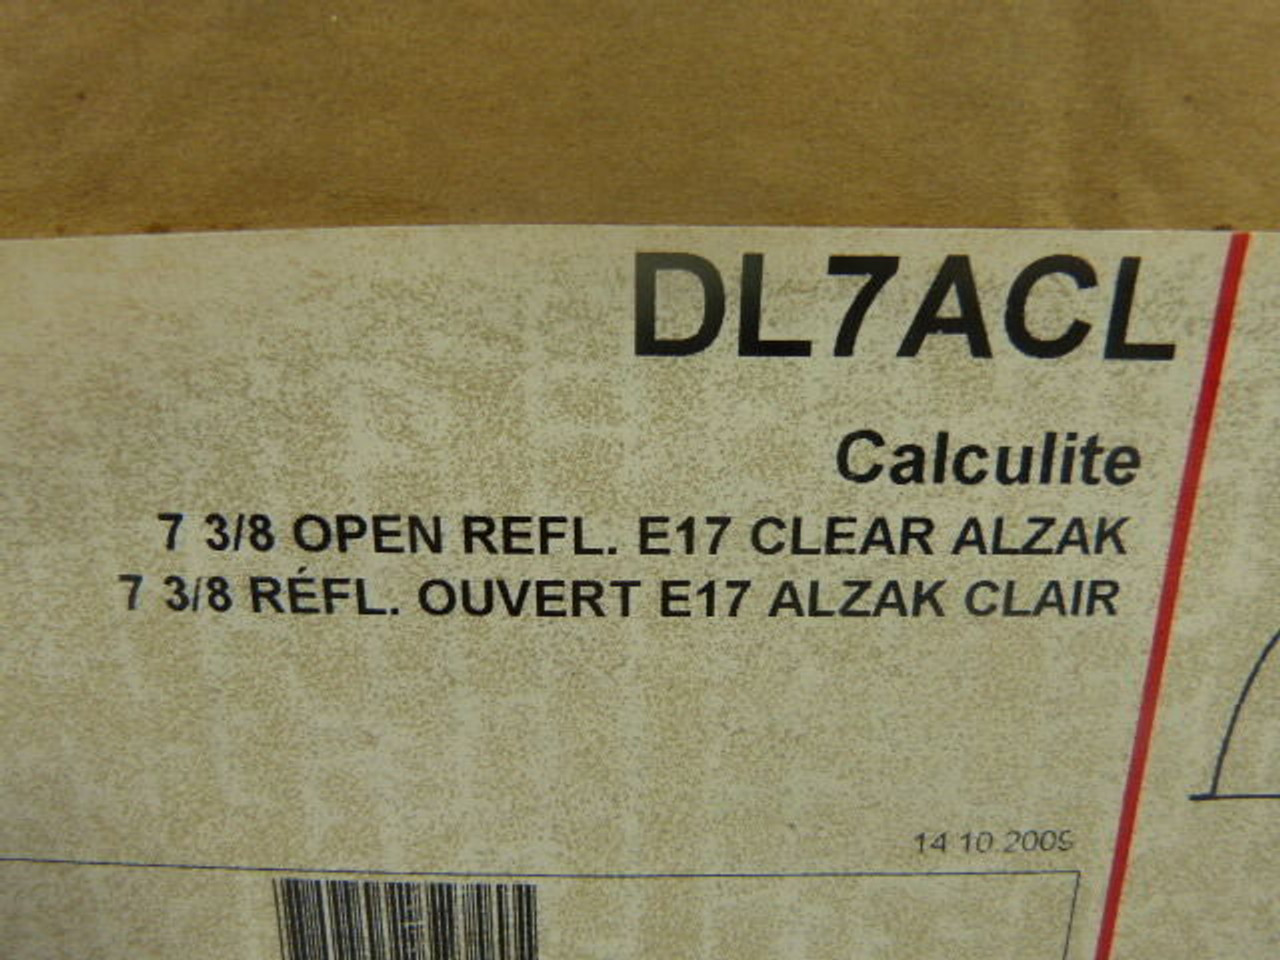 LightOlier DL7ACL Calculite 7-3/8 Open Reflec. E17 - ClearAlzak ! NEW !